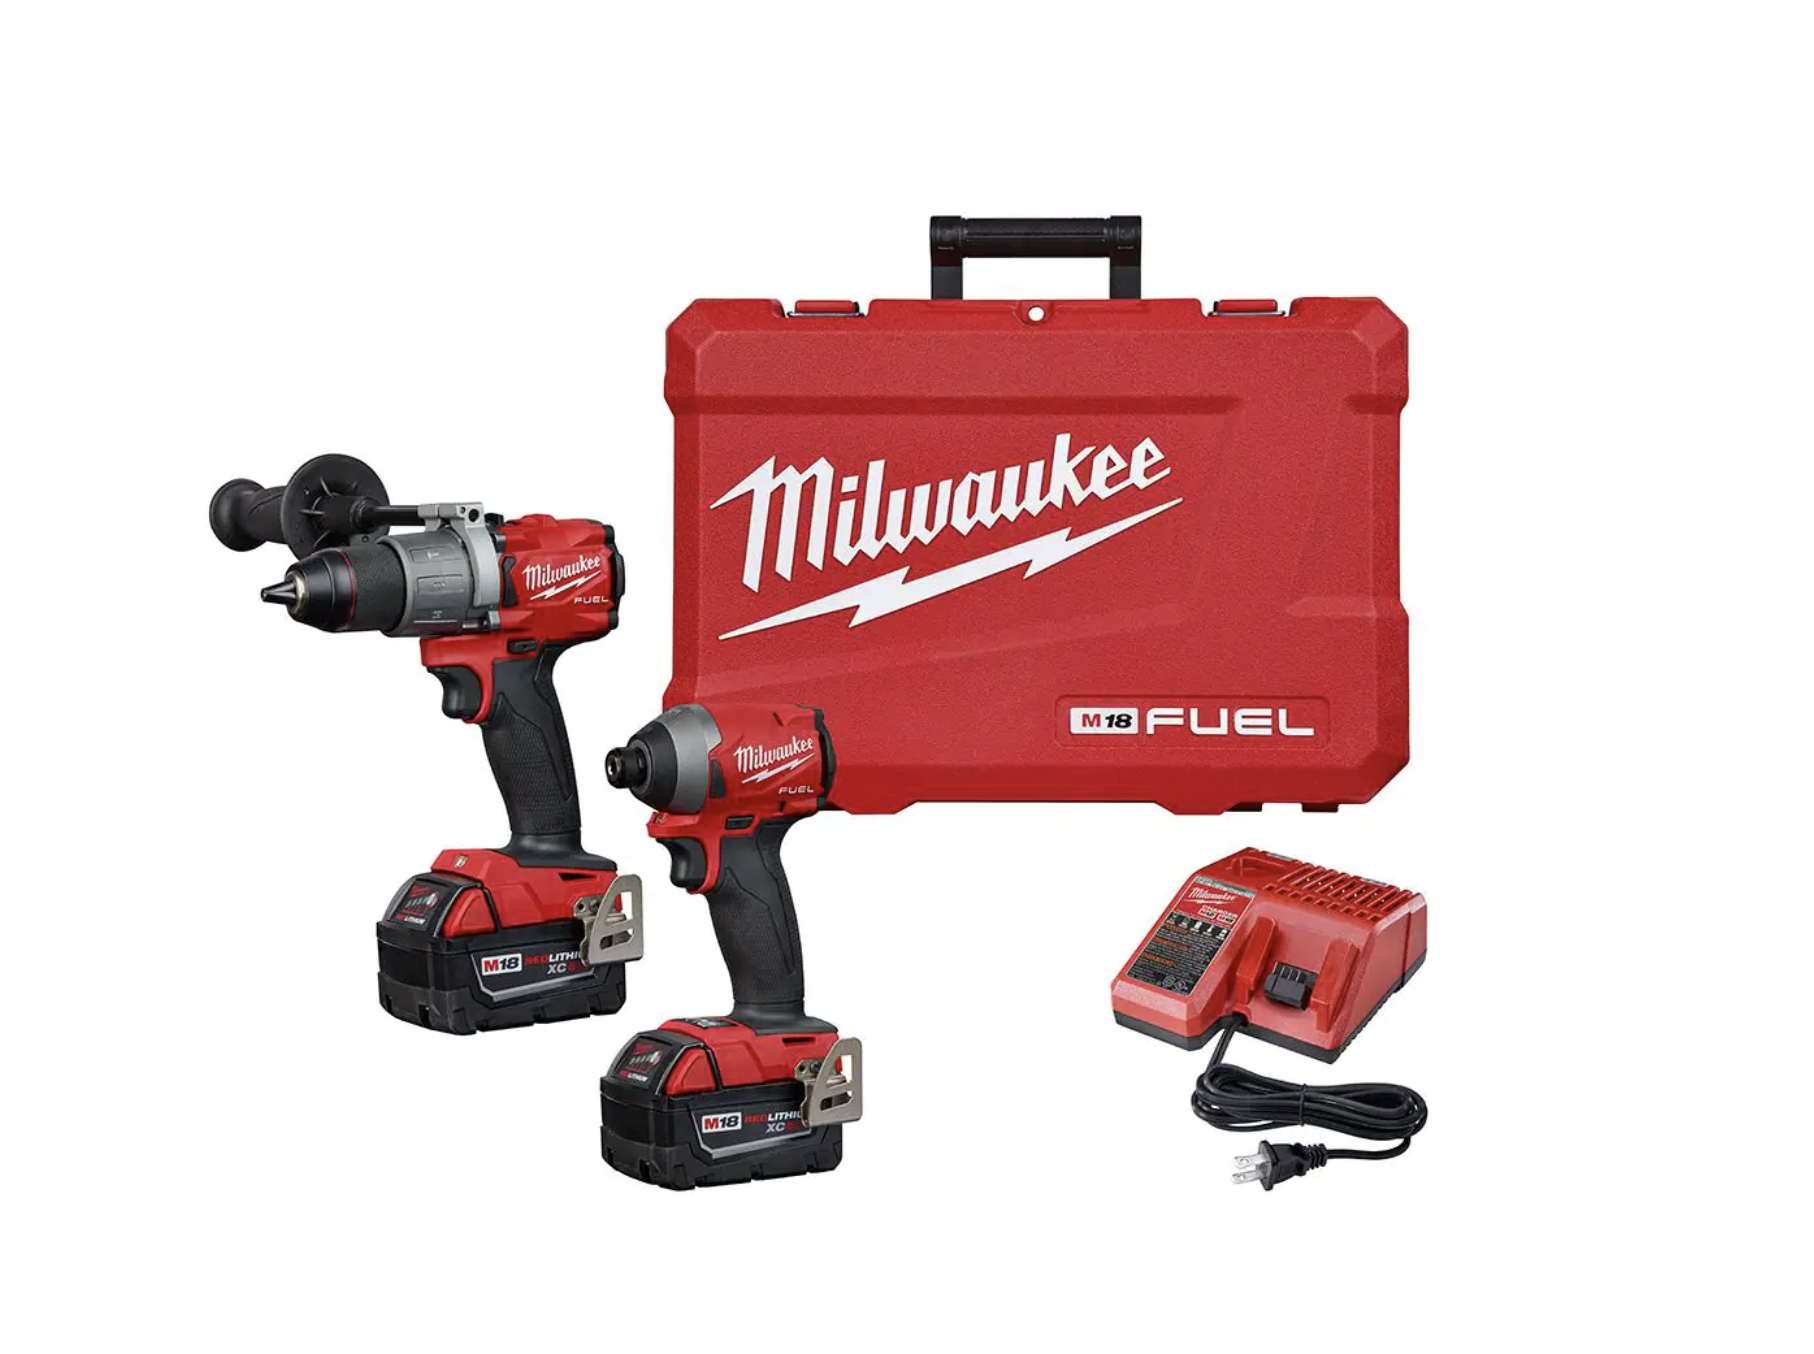 Milwaukee Drill/Hammer Drill